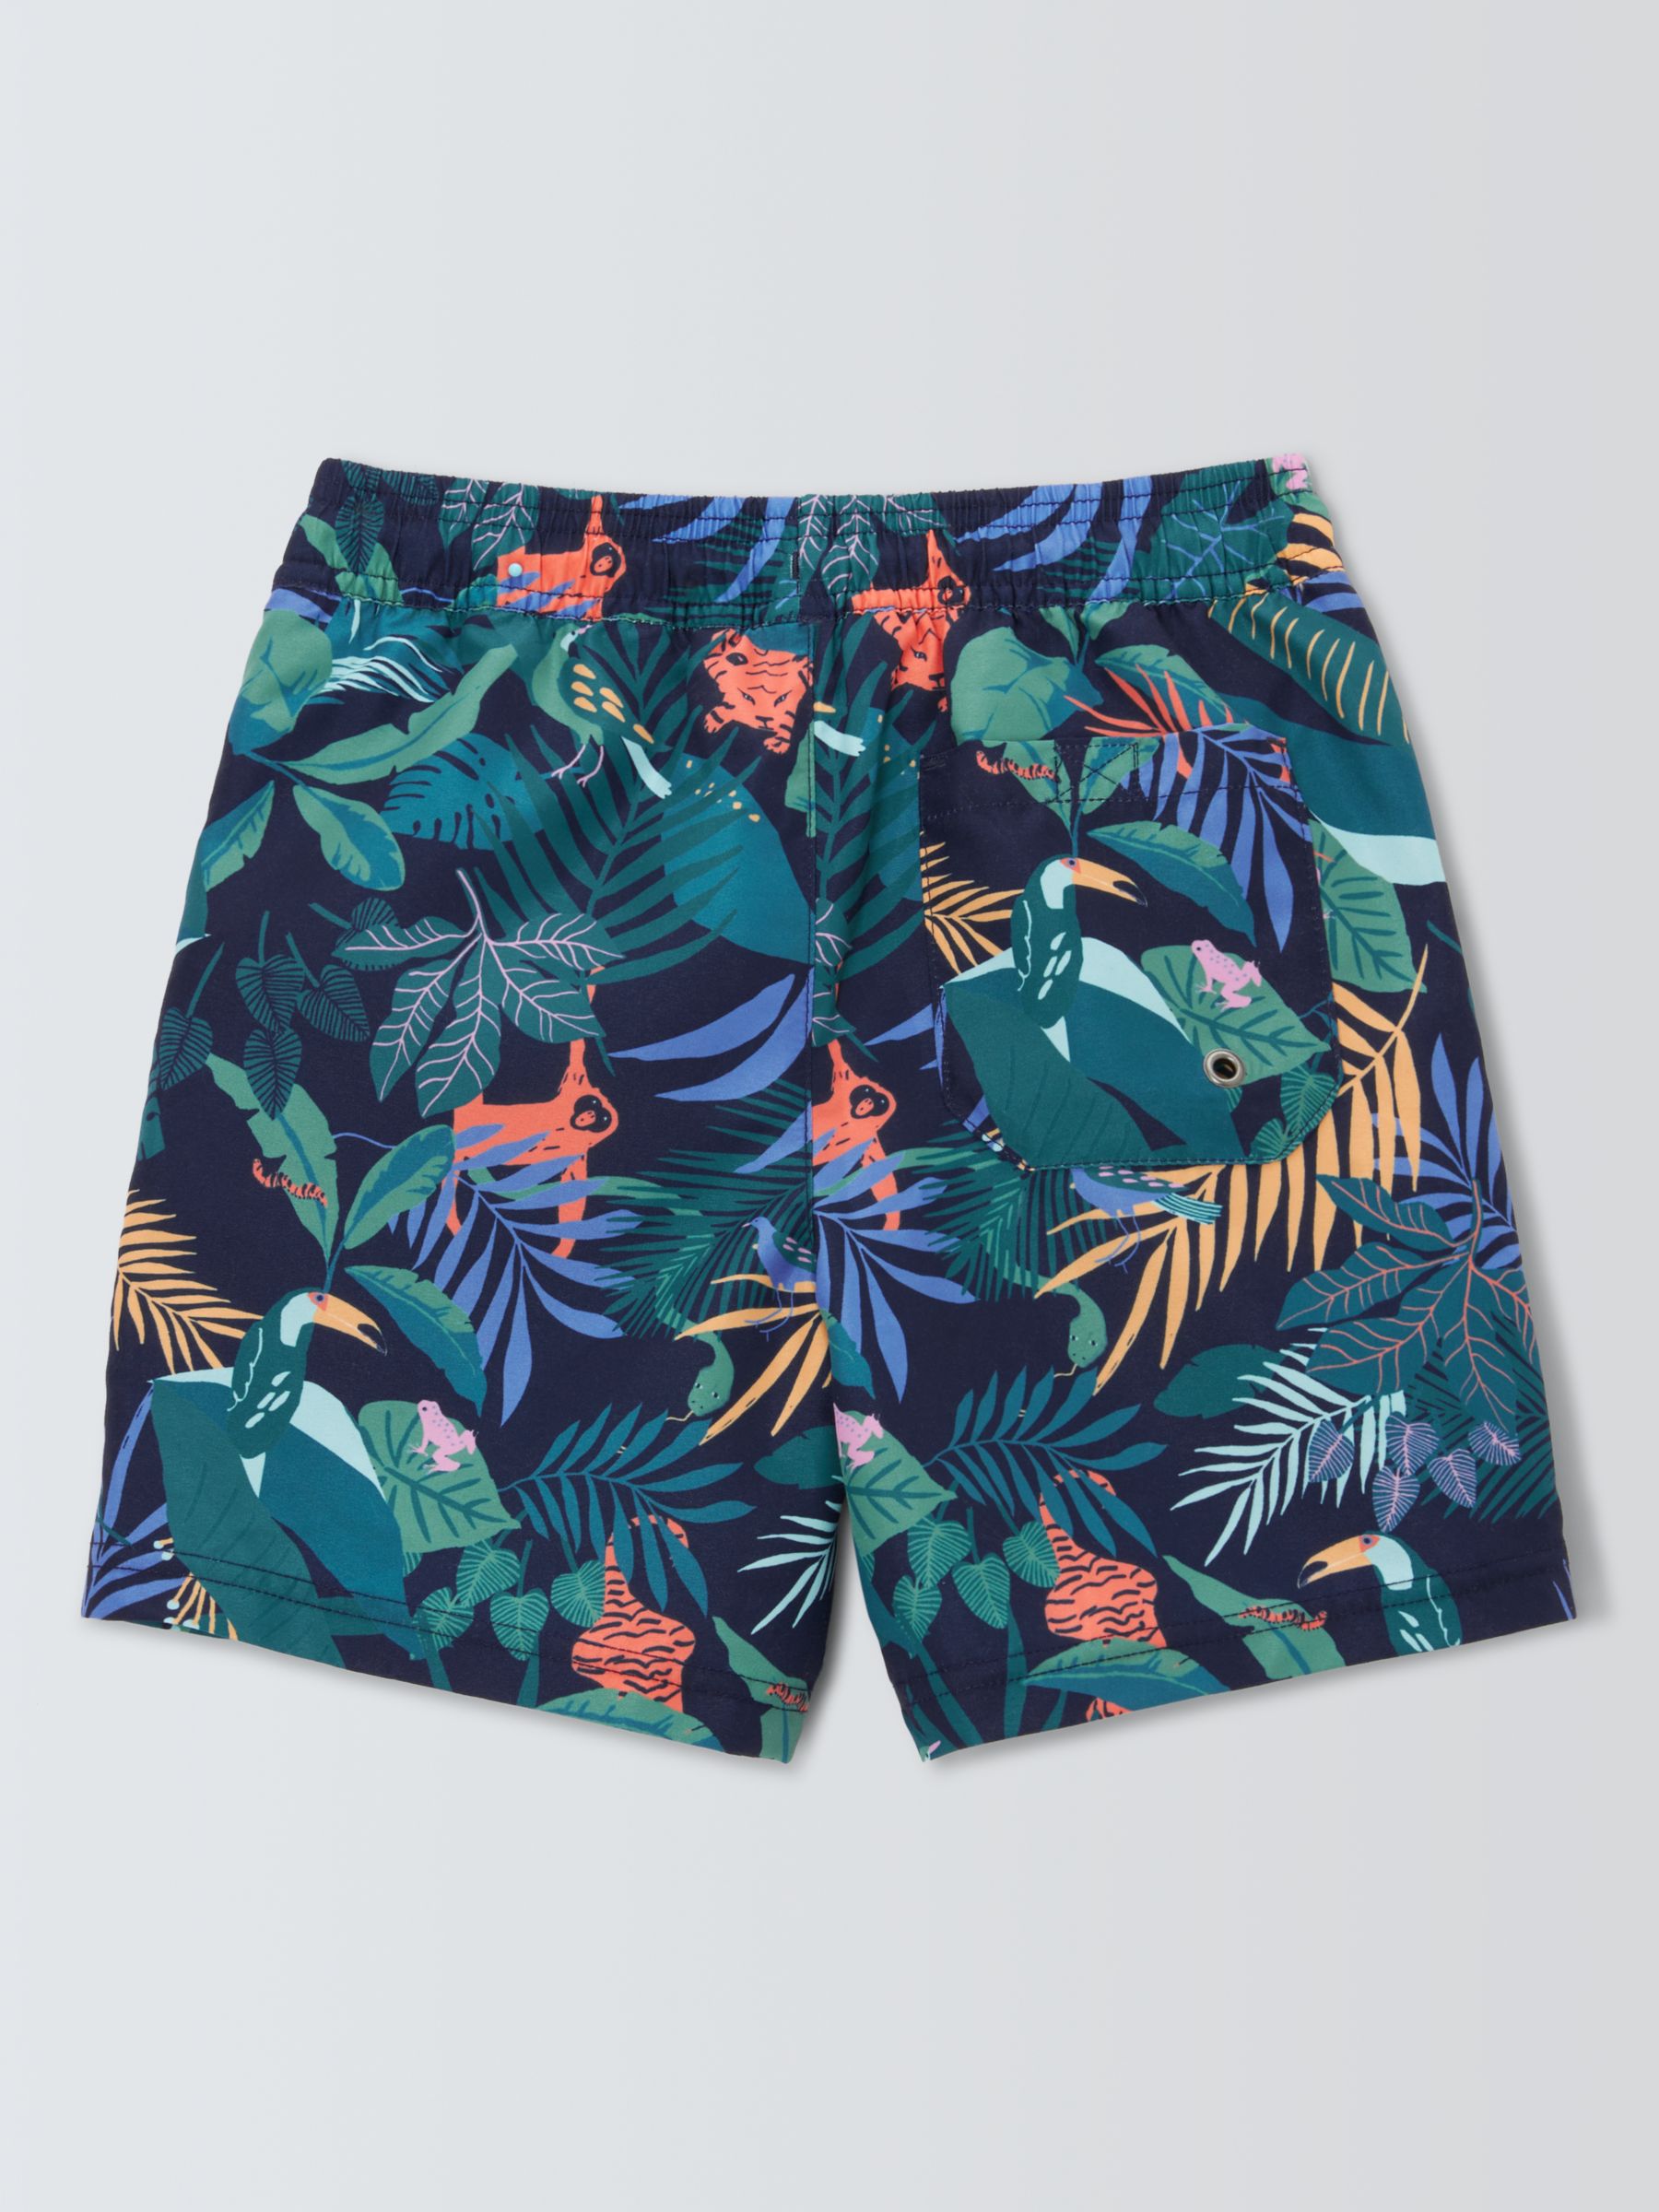 John Lewis Kids' Rainforest Print Swim Shorts, Multi, 7 years